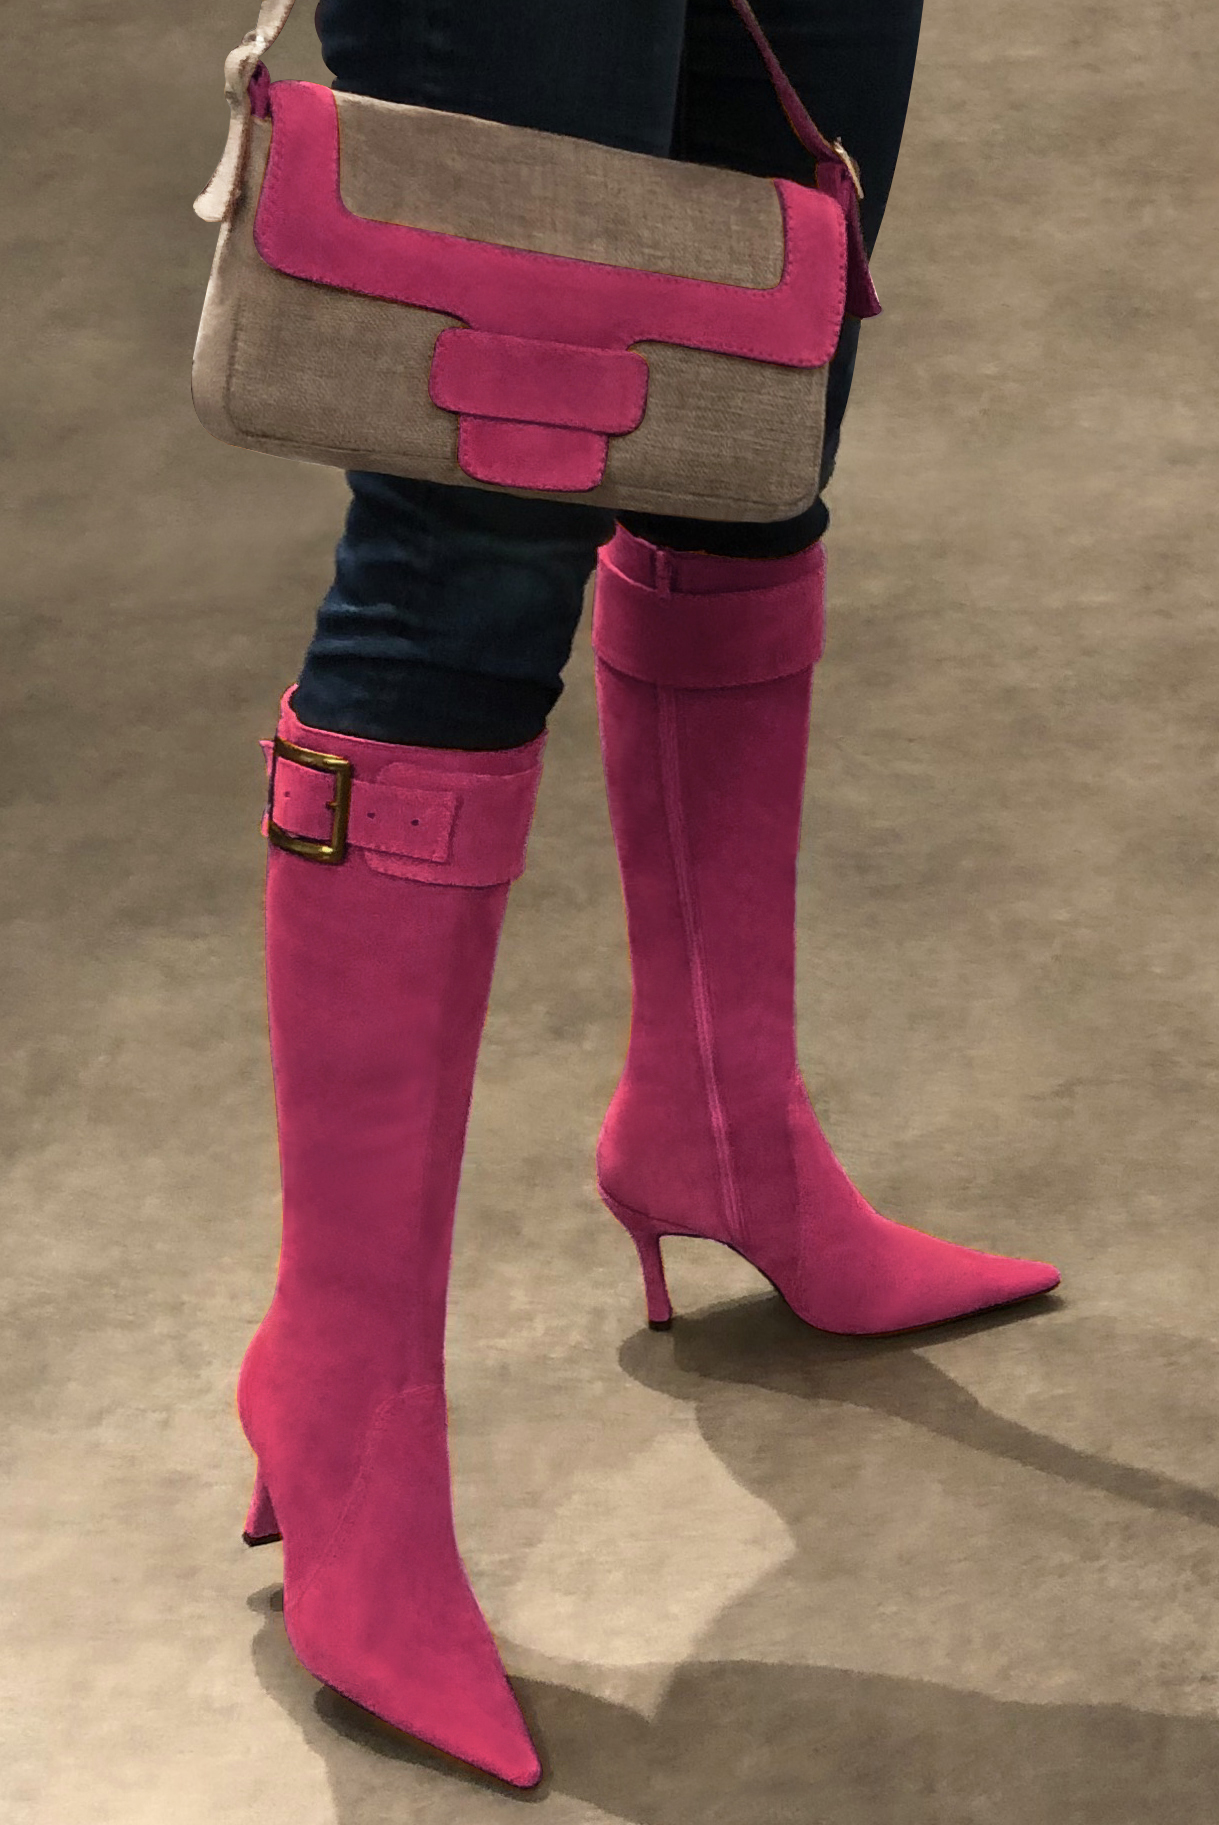 Fuschia pink women's feminine knee-high boots. Pointed toe. Very high spool heels. Made to measure. Worn view - Florence KOOIJMAN